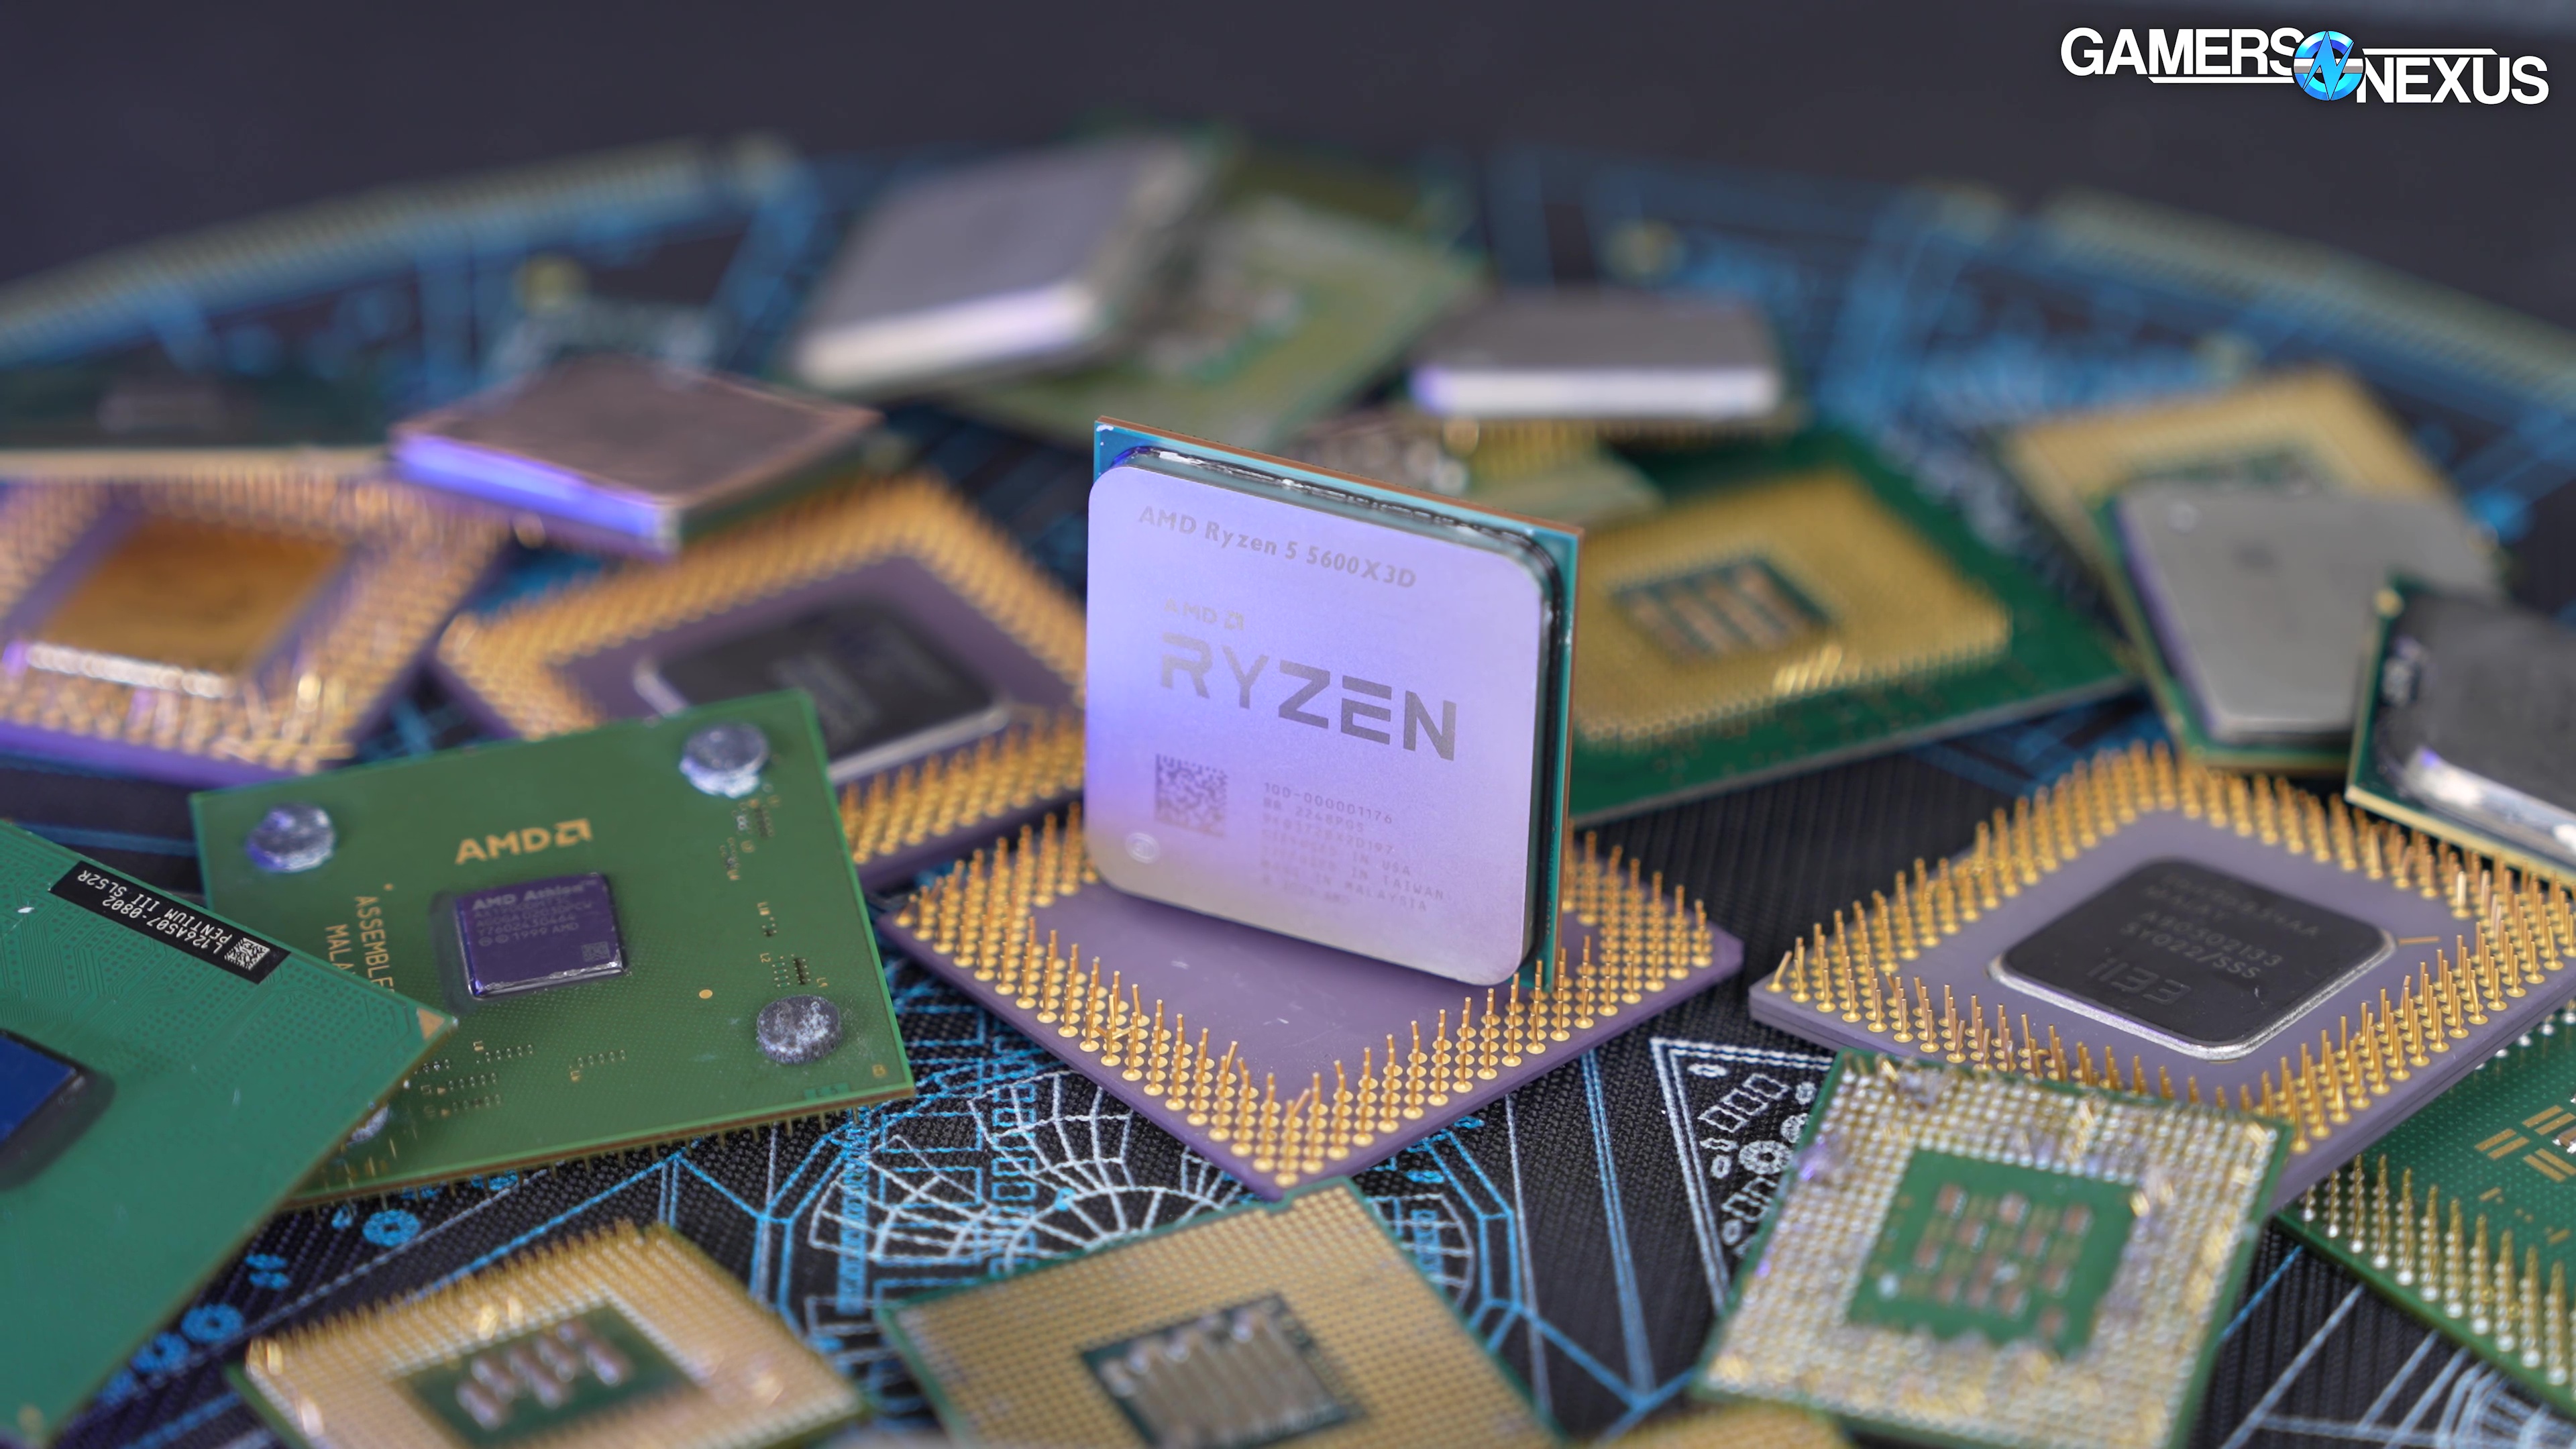 Ryzen 7 5800X3D vs. Ryzen 7 7700, Best Value AMD 8-Core CPU in